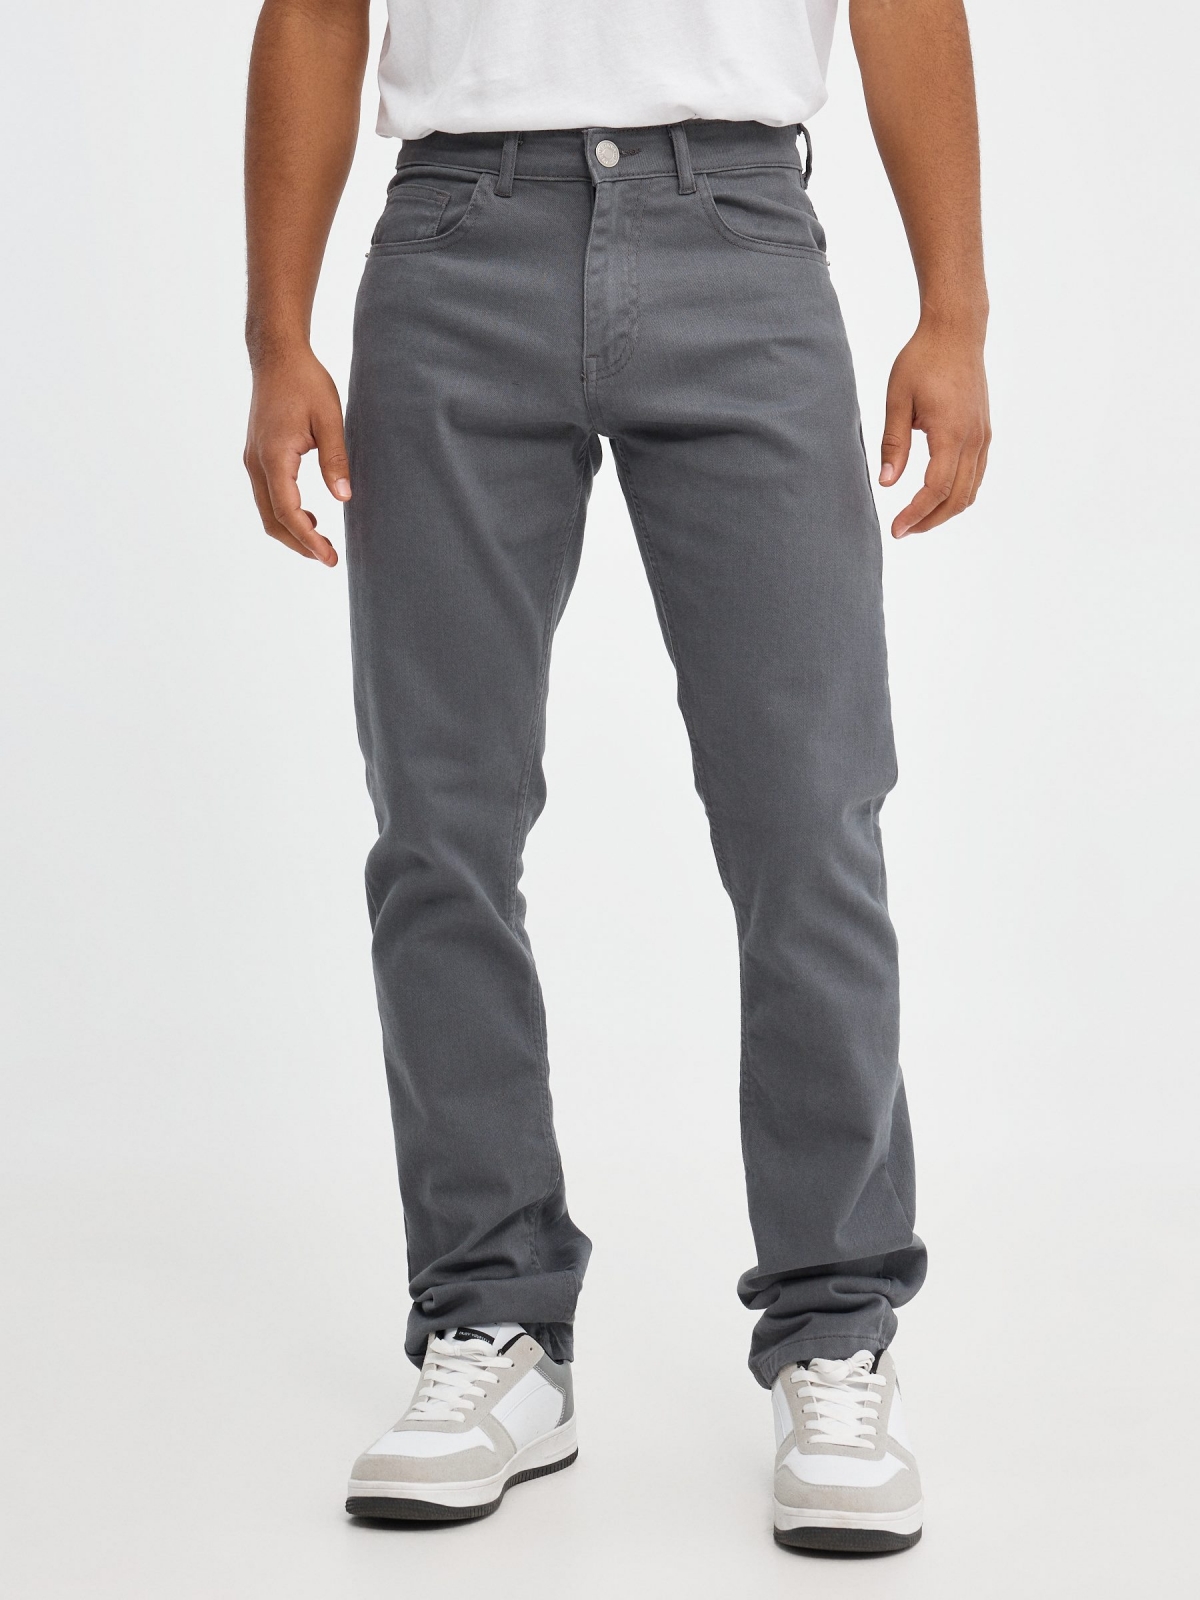 Jeans slim de colores gris vista media frontal